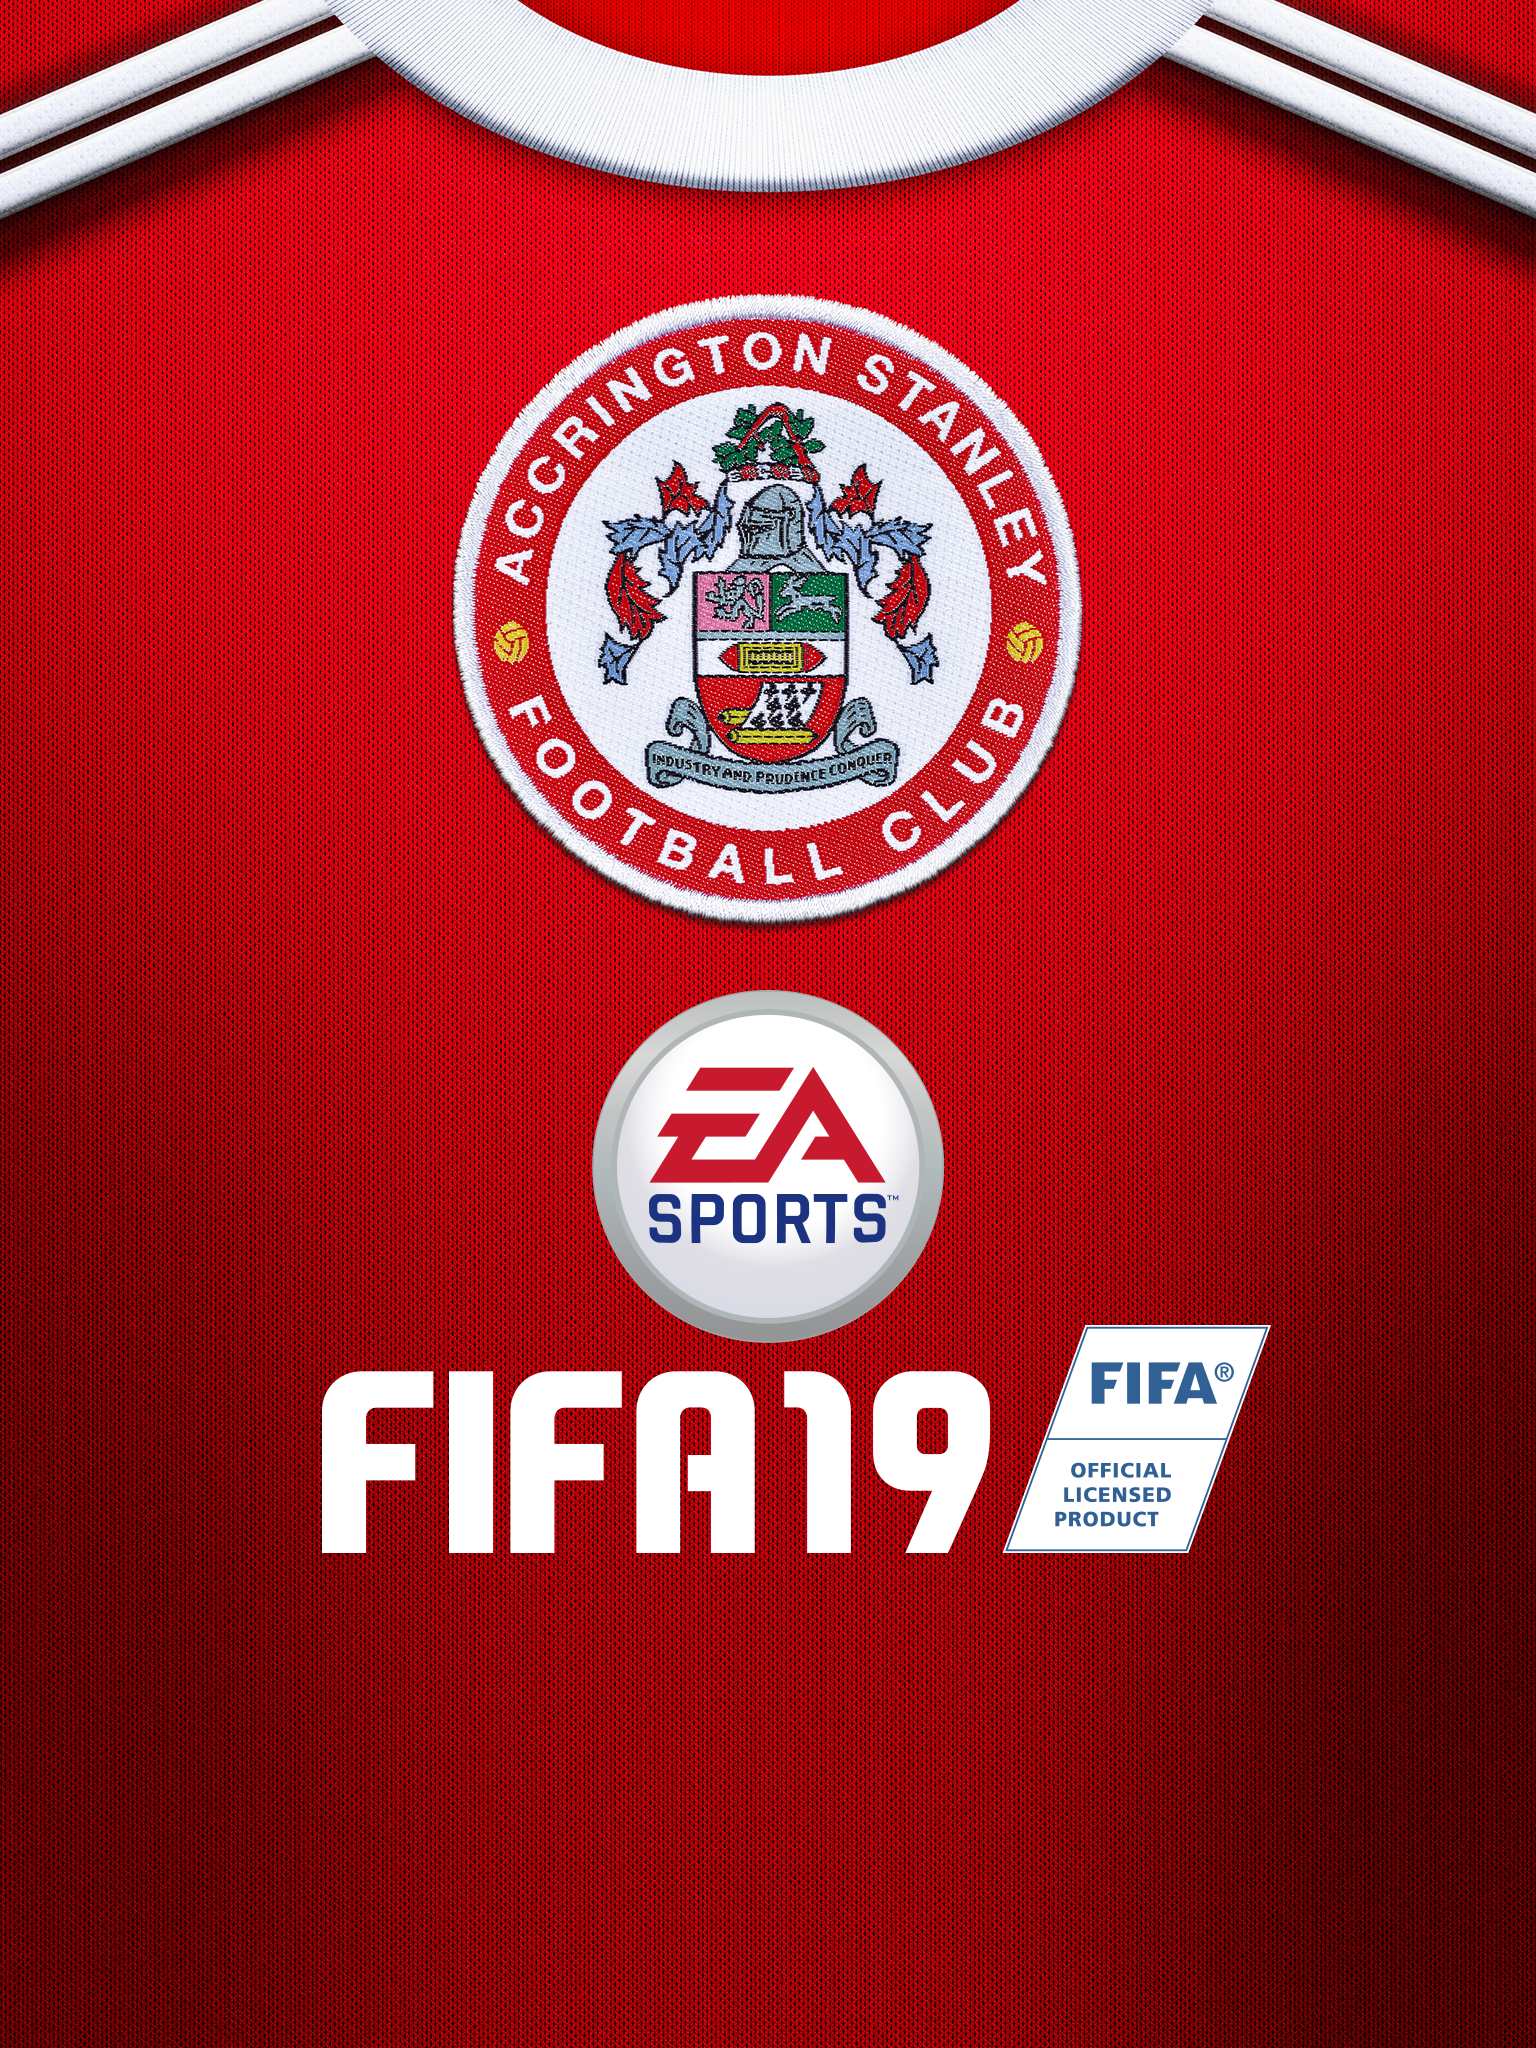 FIFA 19 - Accrington Stanley F.C. Club Pack - EA SPORTS